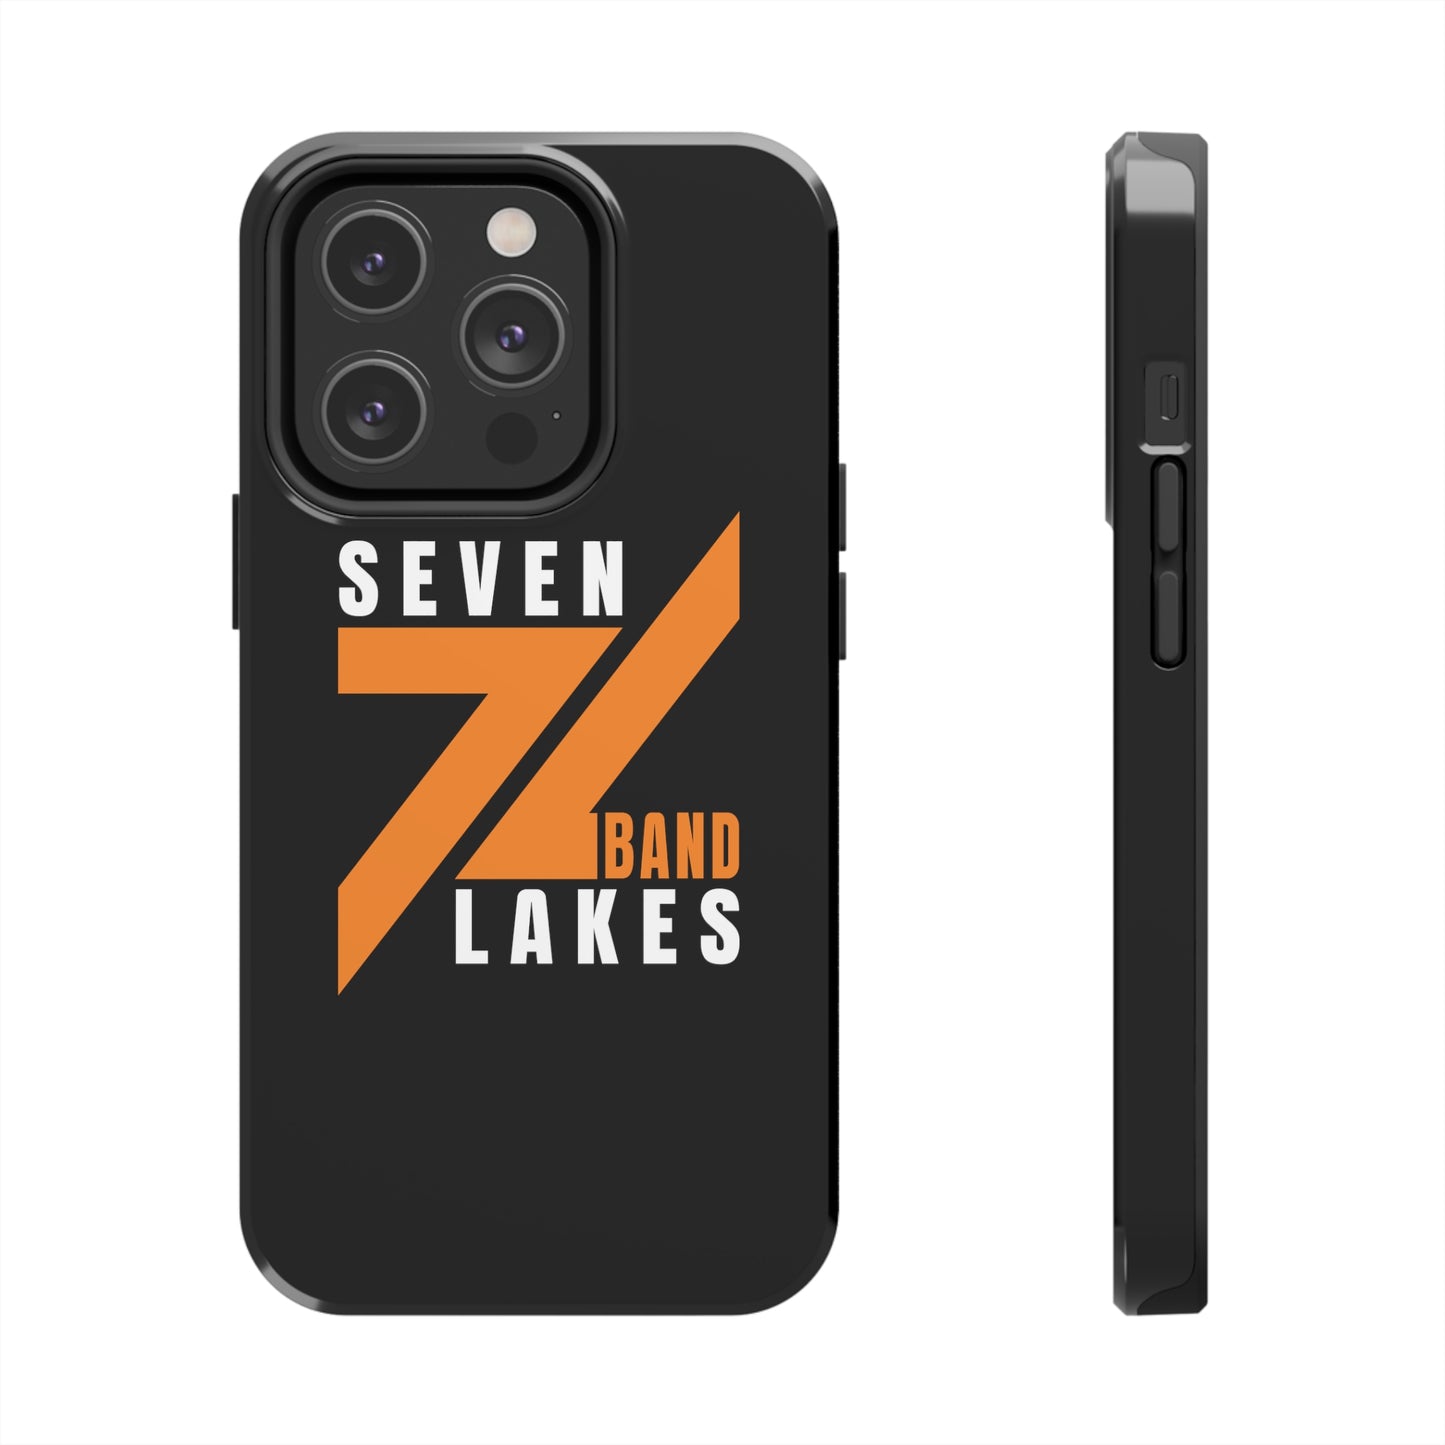 7L Band - iPhone Case - Black